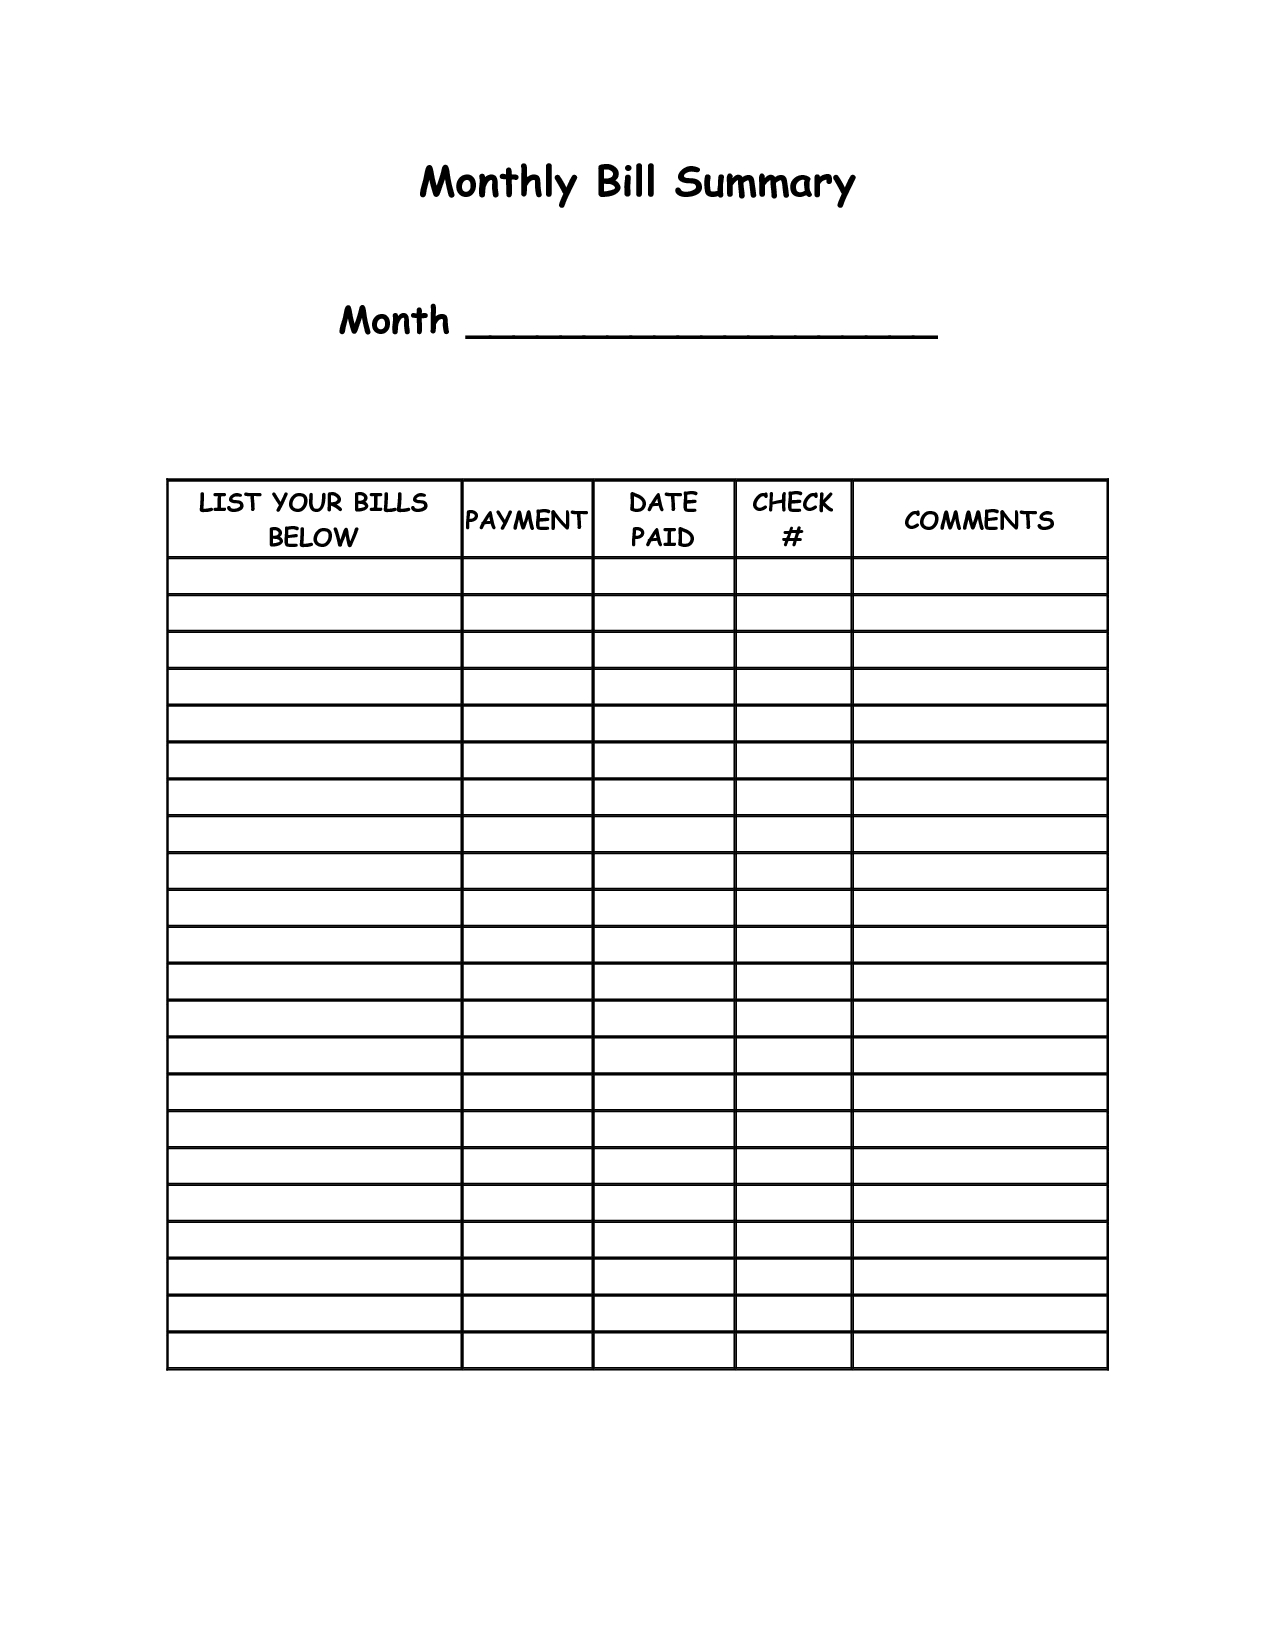 Monthly Bill Summary Doc | Organizing Monthly Bills, Bill within Bill Organizer Free Print Month Year